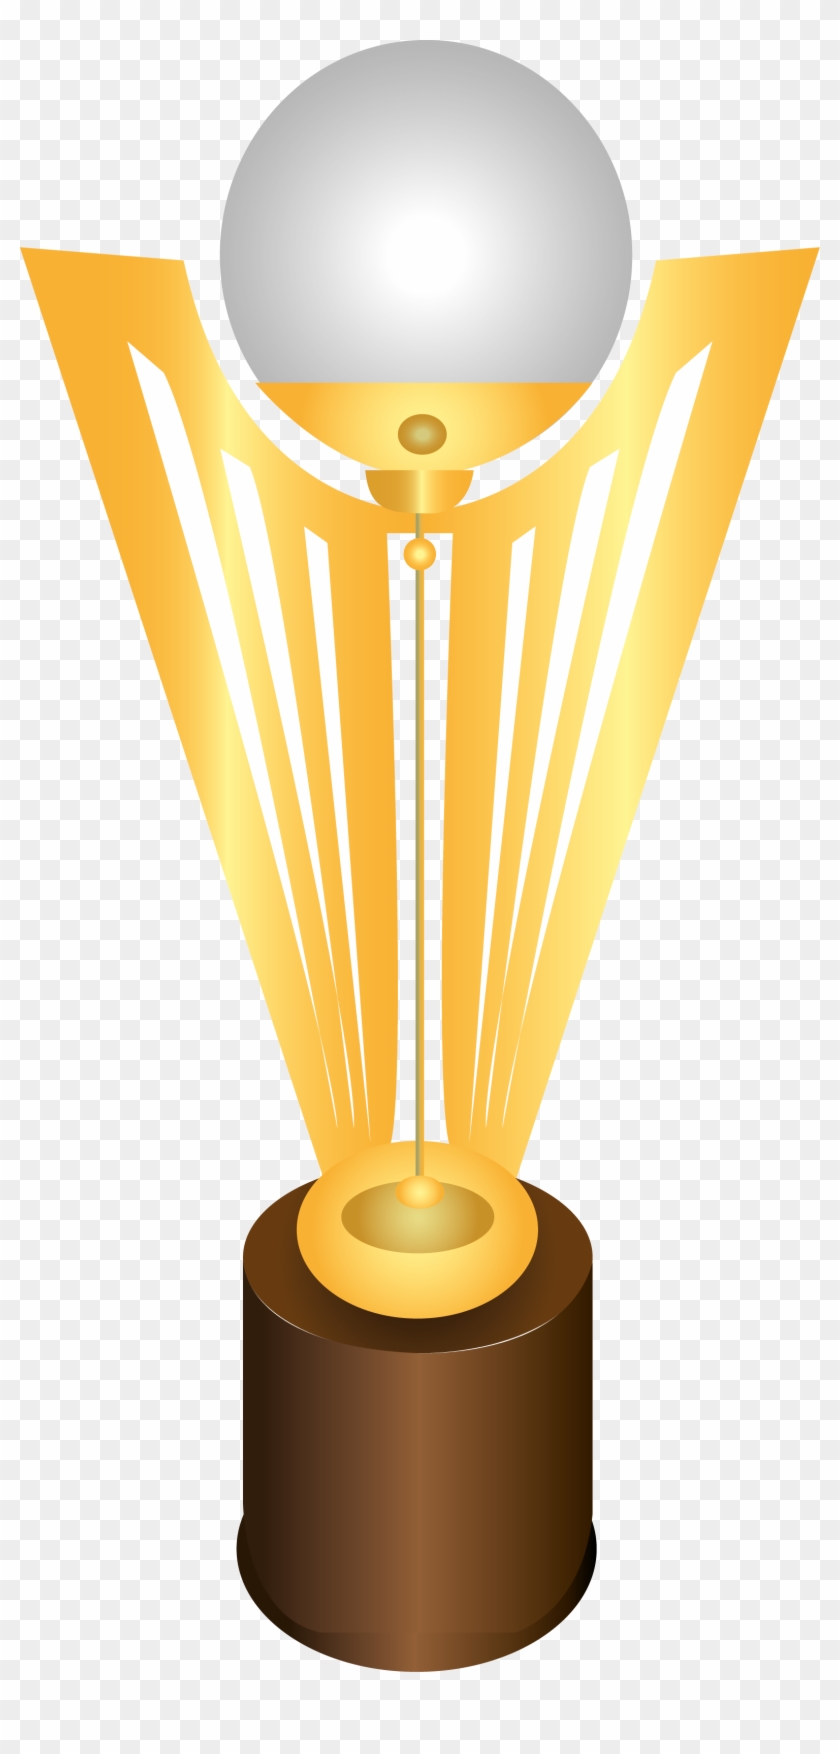 Copa Centroamericana Trophy - Copa De Centroamericana De Naciones Clipart #578945